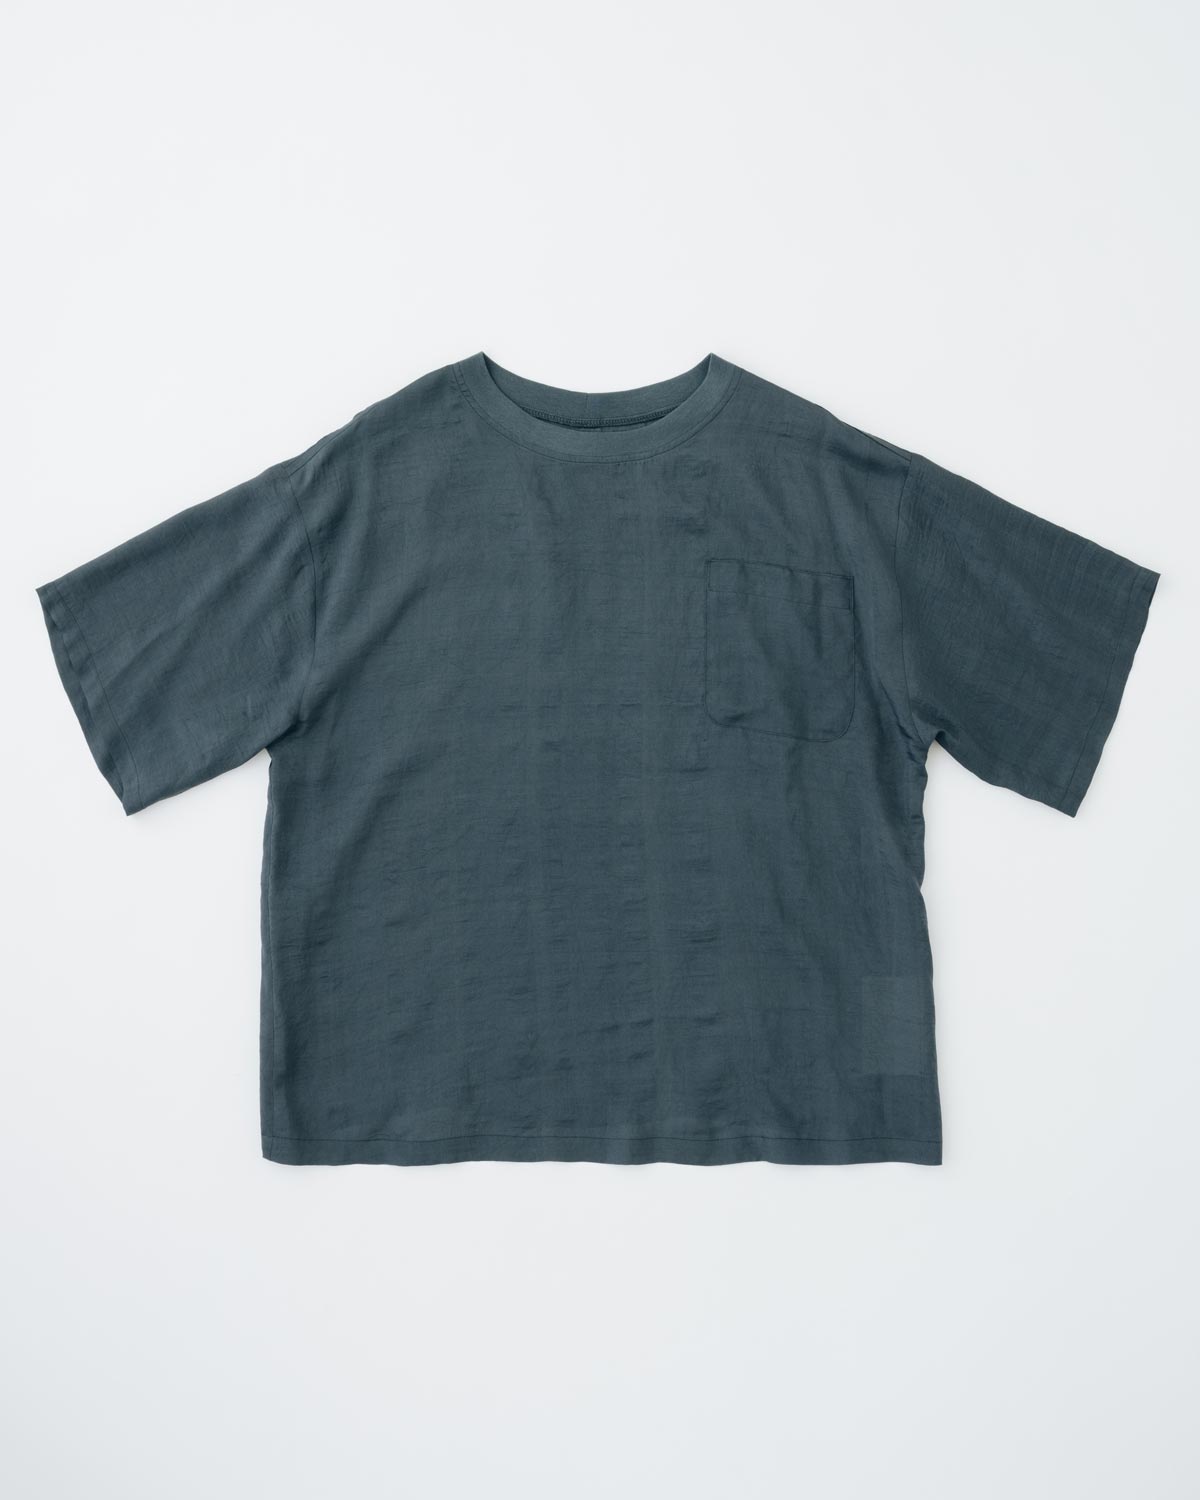 Silk T-shirts Charcoal gray